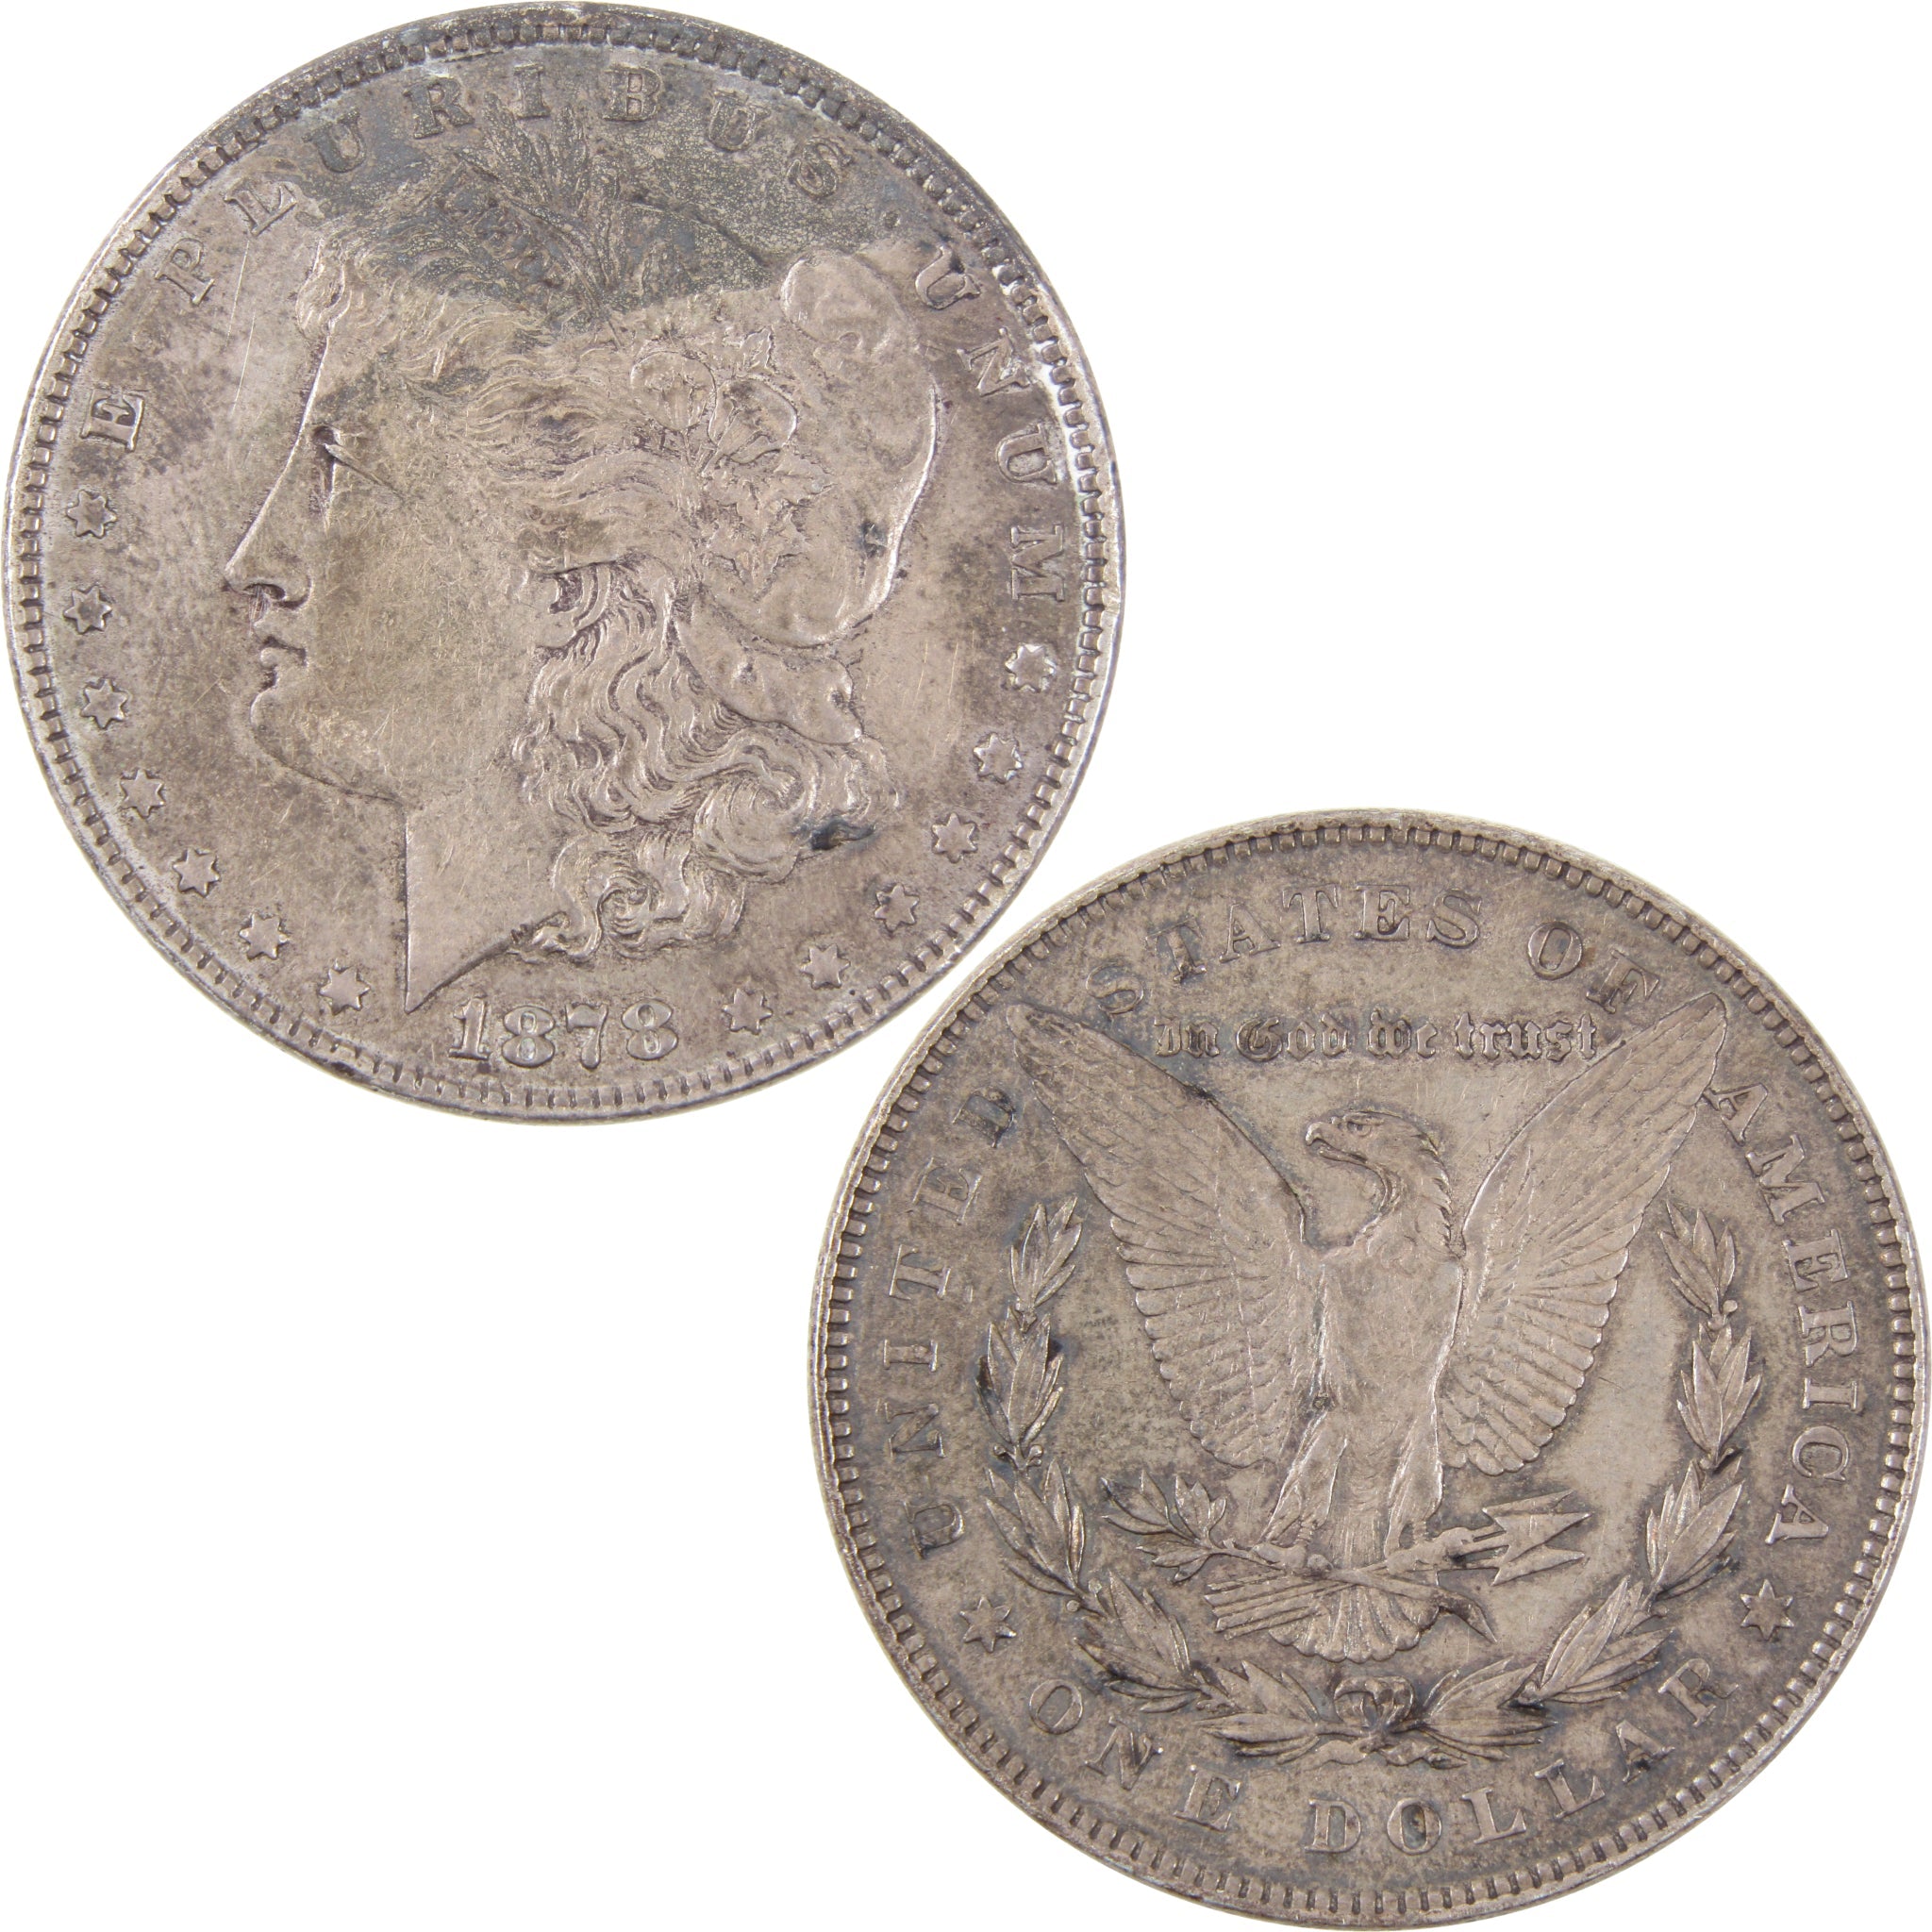 1878 7TF Rev 78 Morgan Dollar VF Very Fine 90% Silver SKU:I2554 - Morgan coin - Morgan silver dollar - Morgan silver dollar for sale - Profile Coins &amp; Collectibles